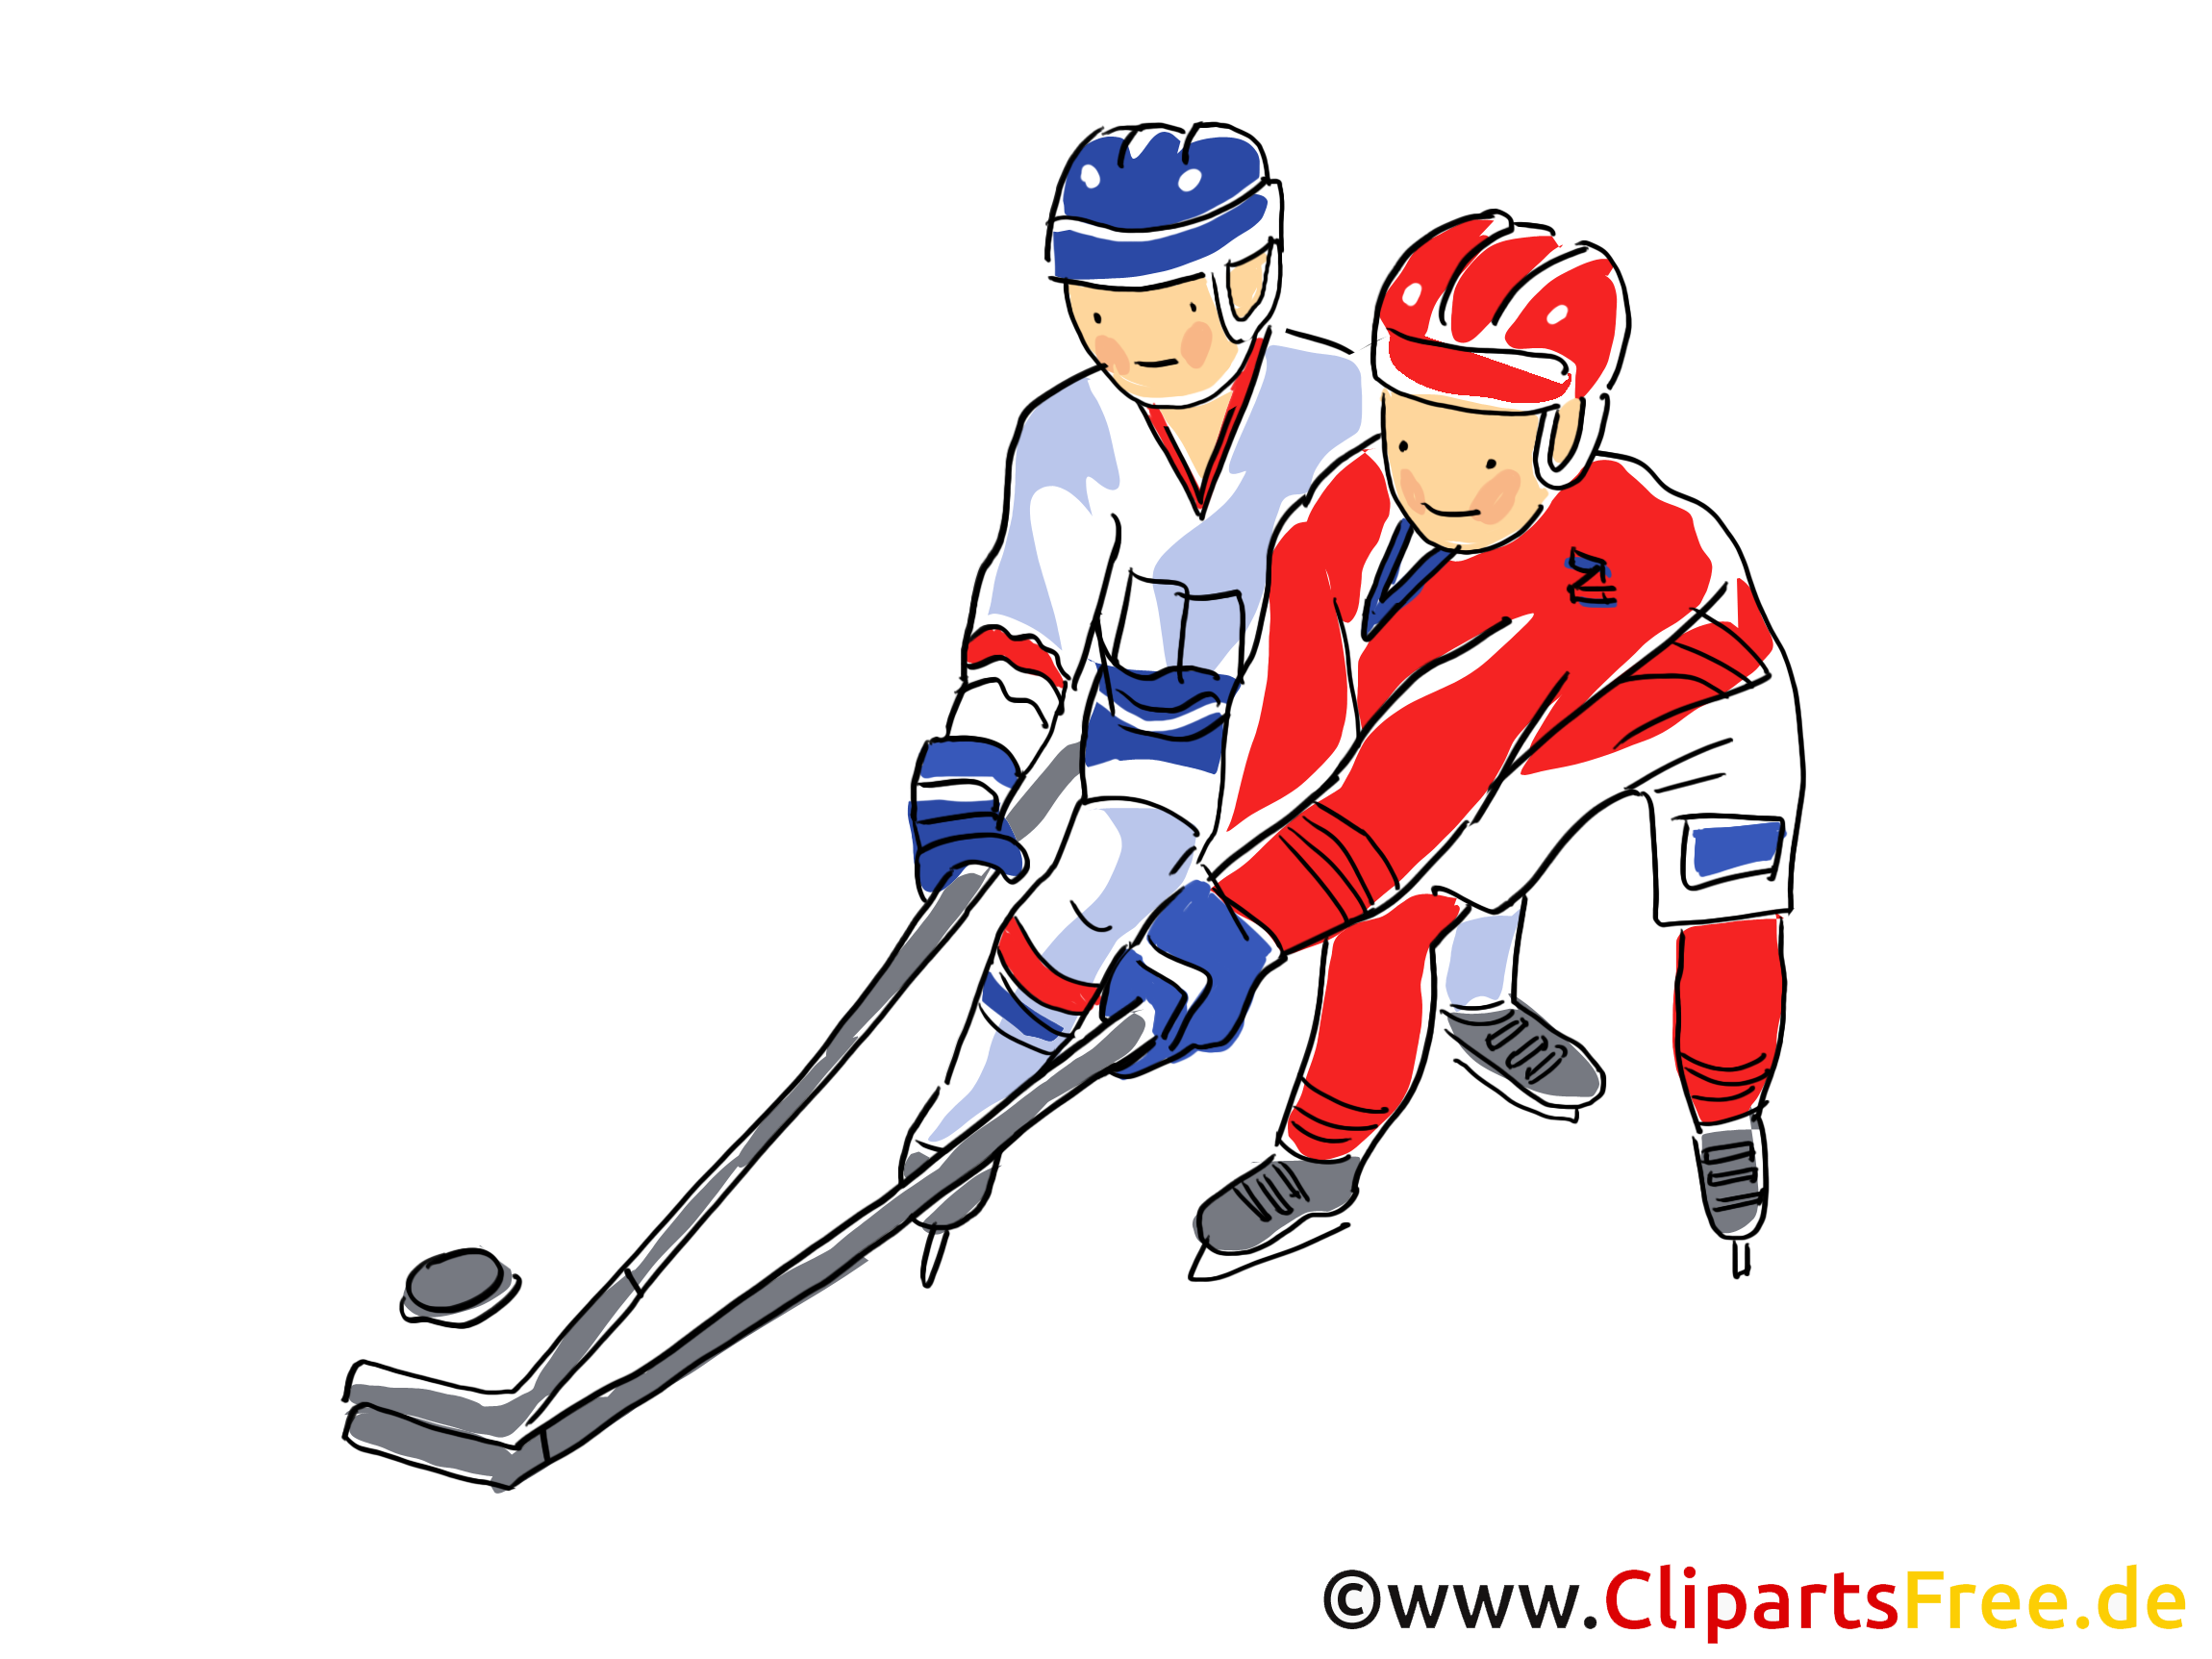 Palet image gratuite - Hockey cliparts